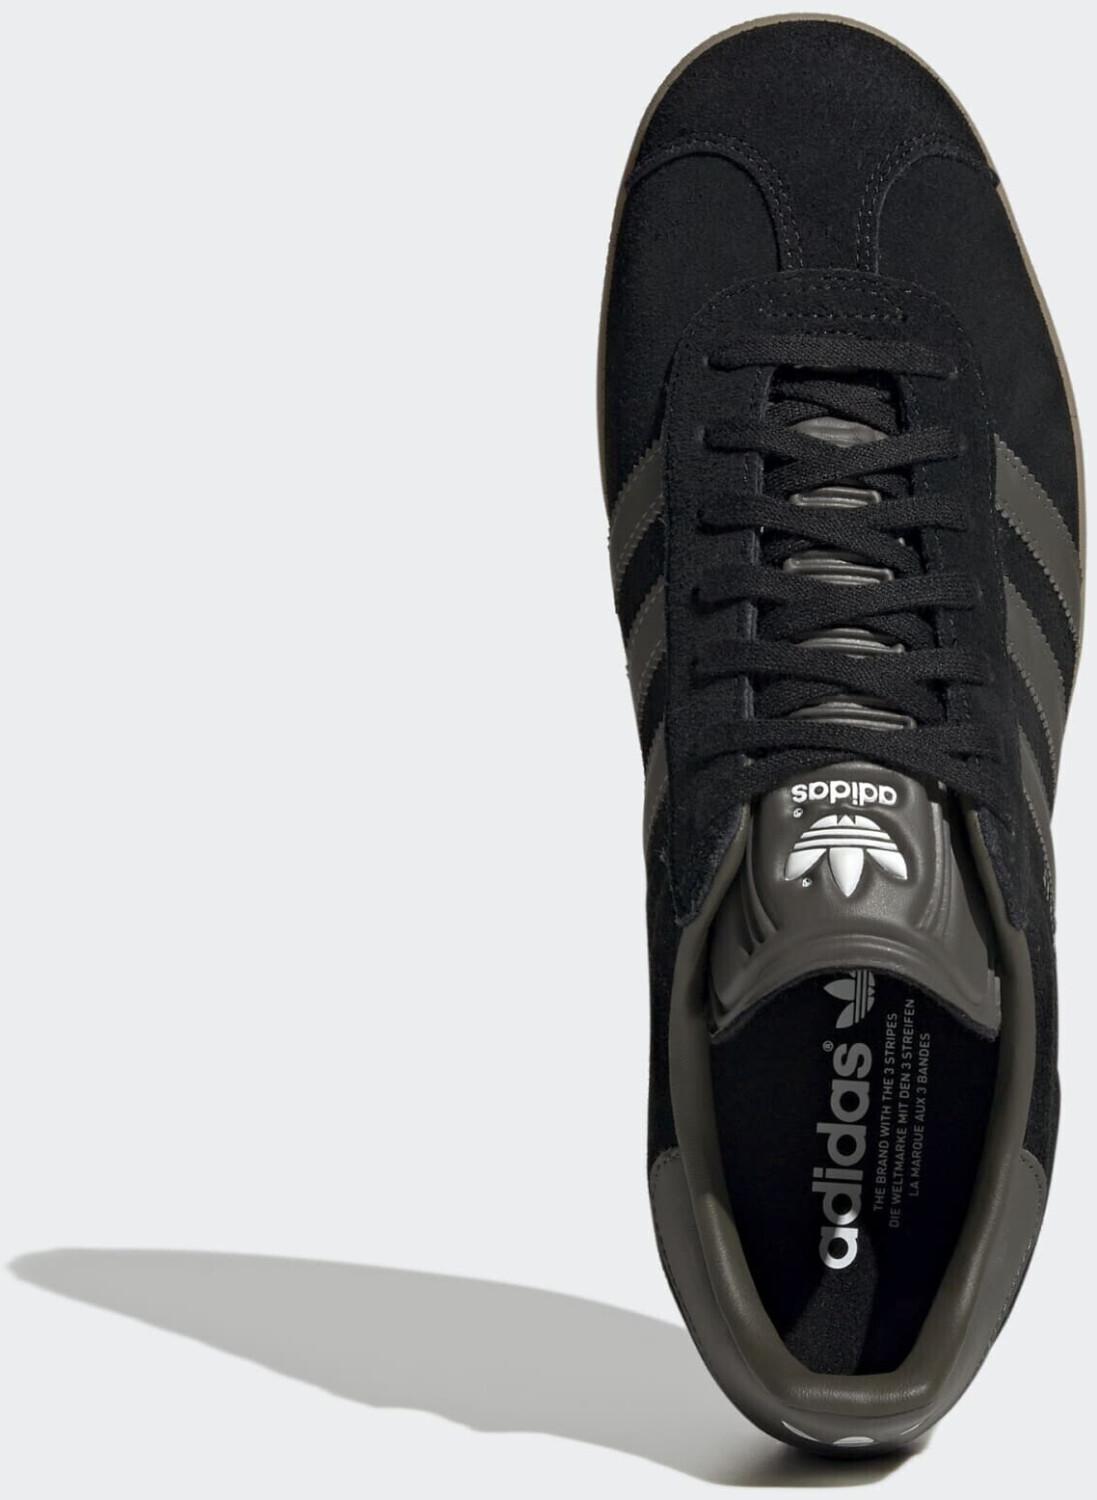 Buy Adidas Gazelle core black/pantone/cloud white from £84.99